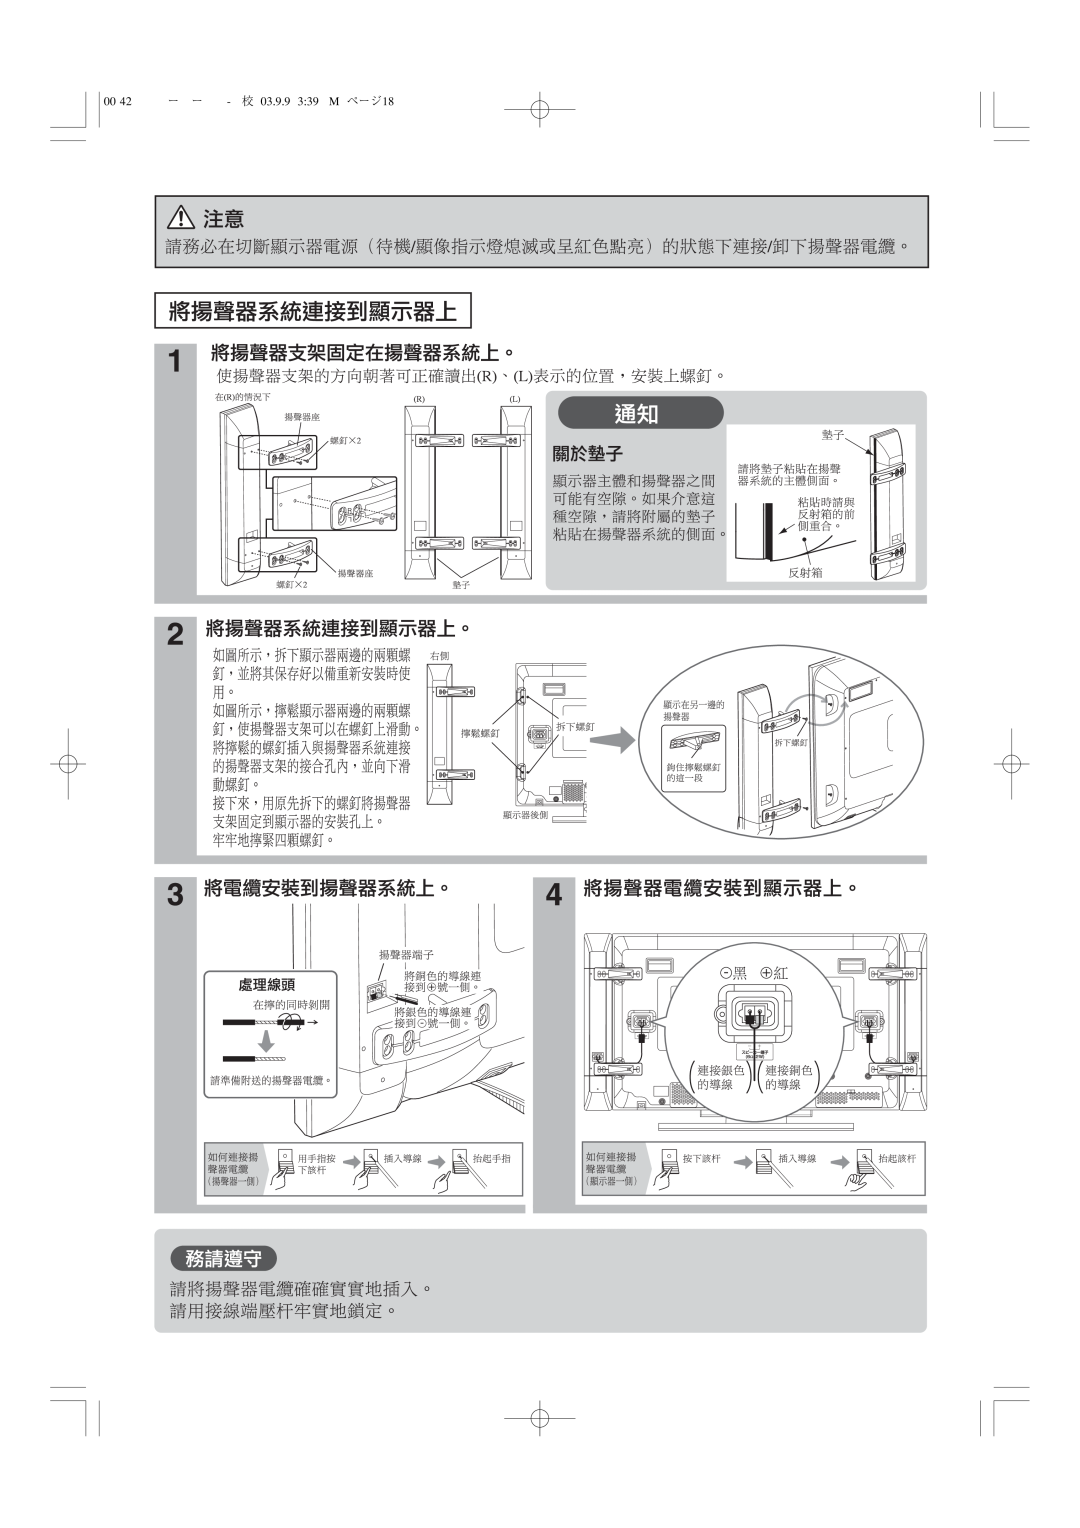 Hitachi 42PD5000 user manual 00 42型スピーカー統合-五校 03.9.9 339 PM ページ18 